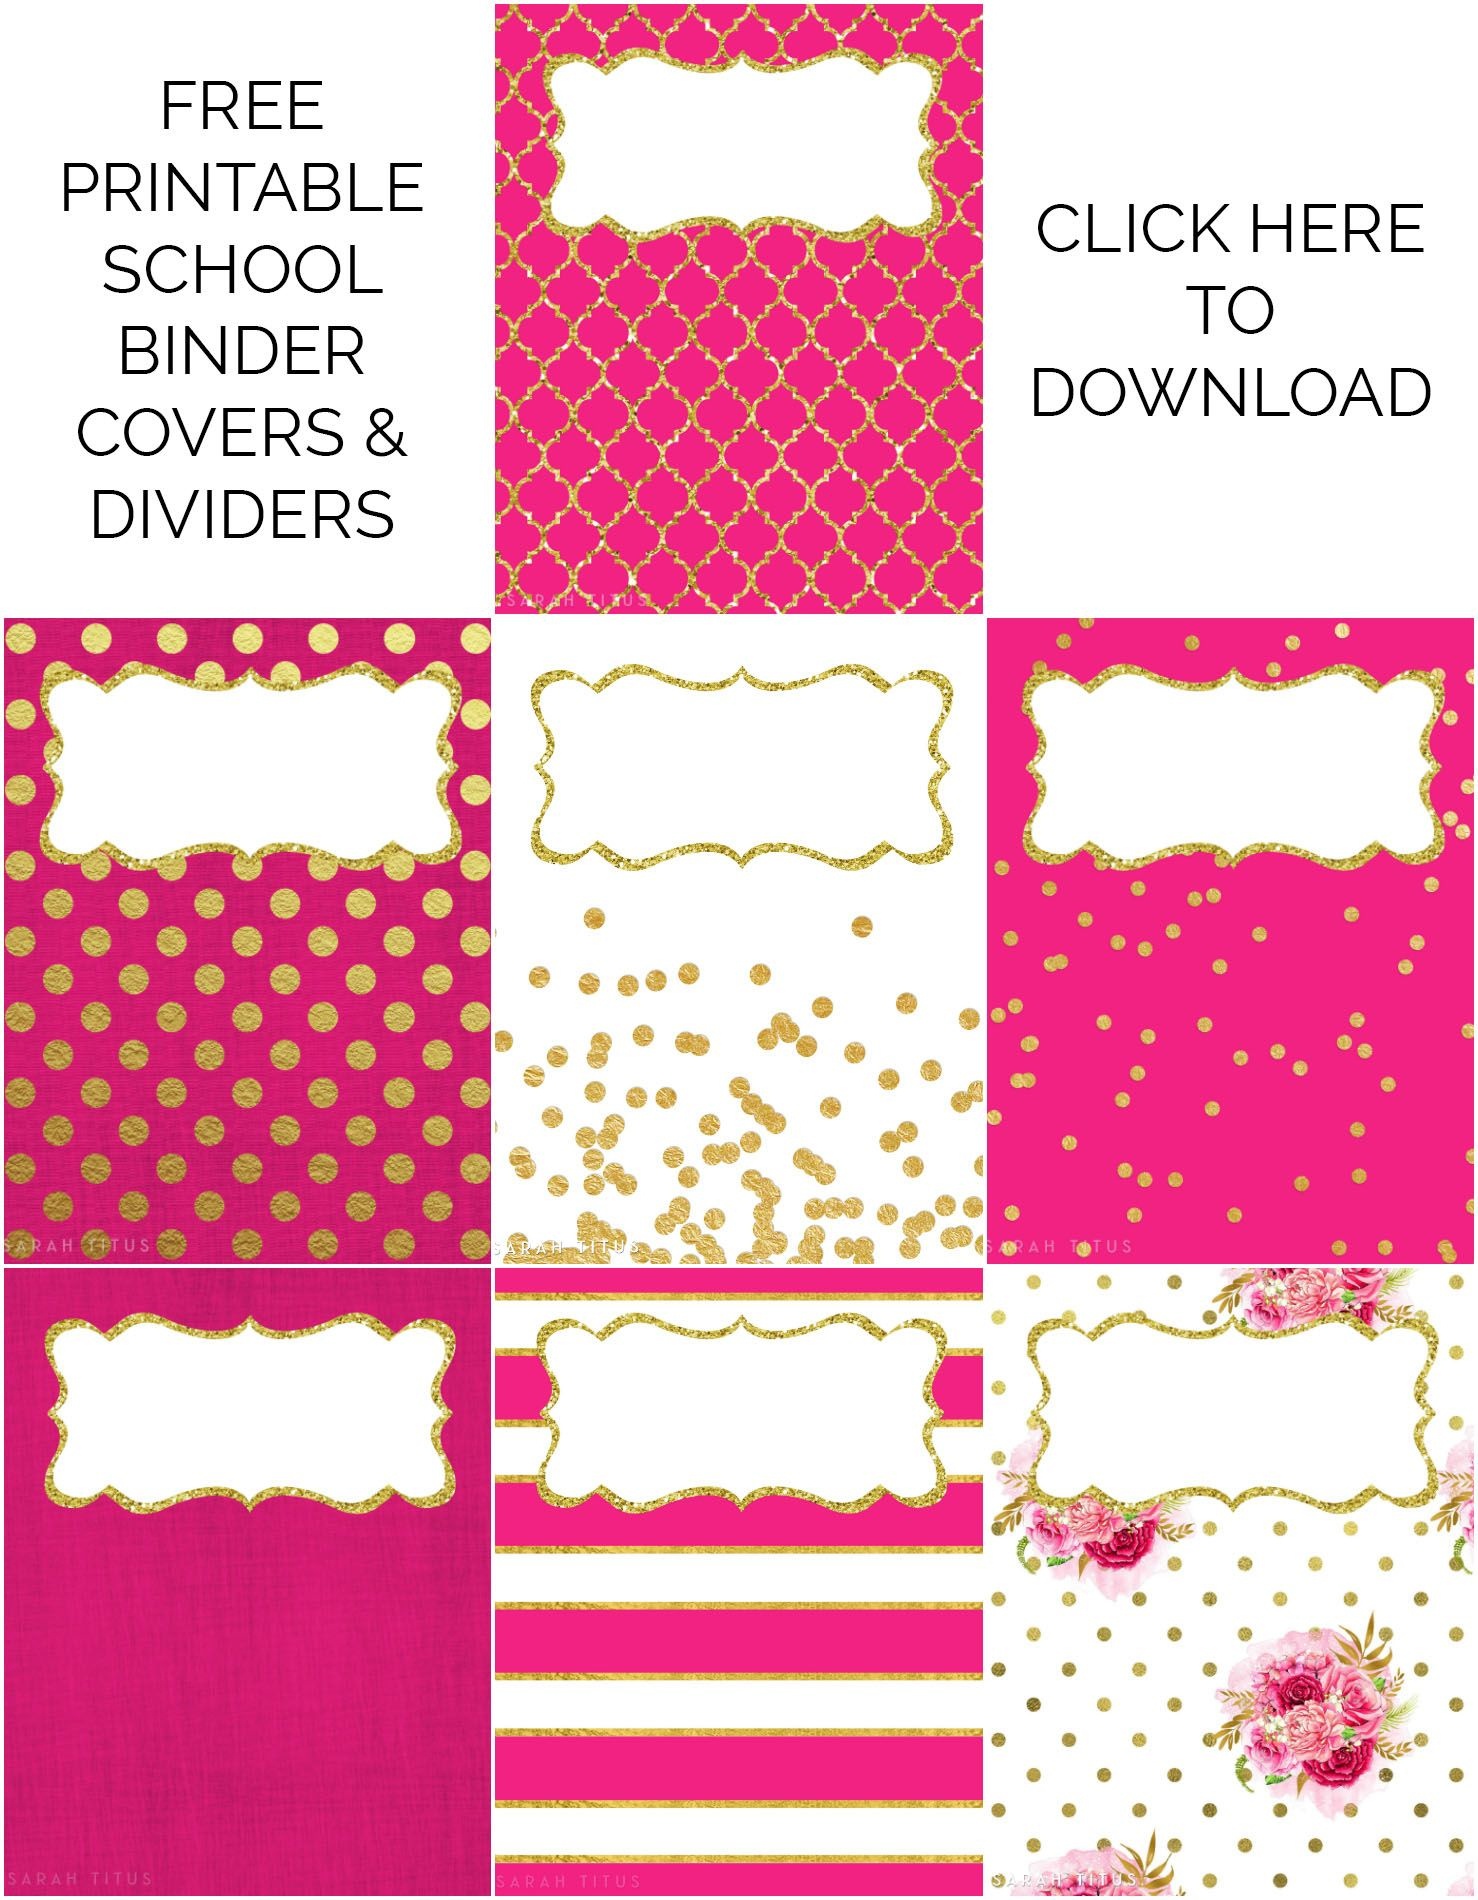 Binder Covers / Dividers Free Printables | Plans | Binder Covers - Free Printable Binder Covers